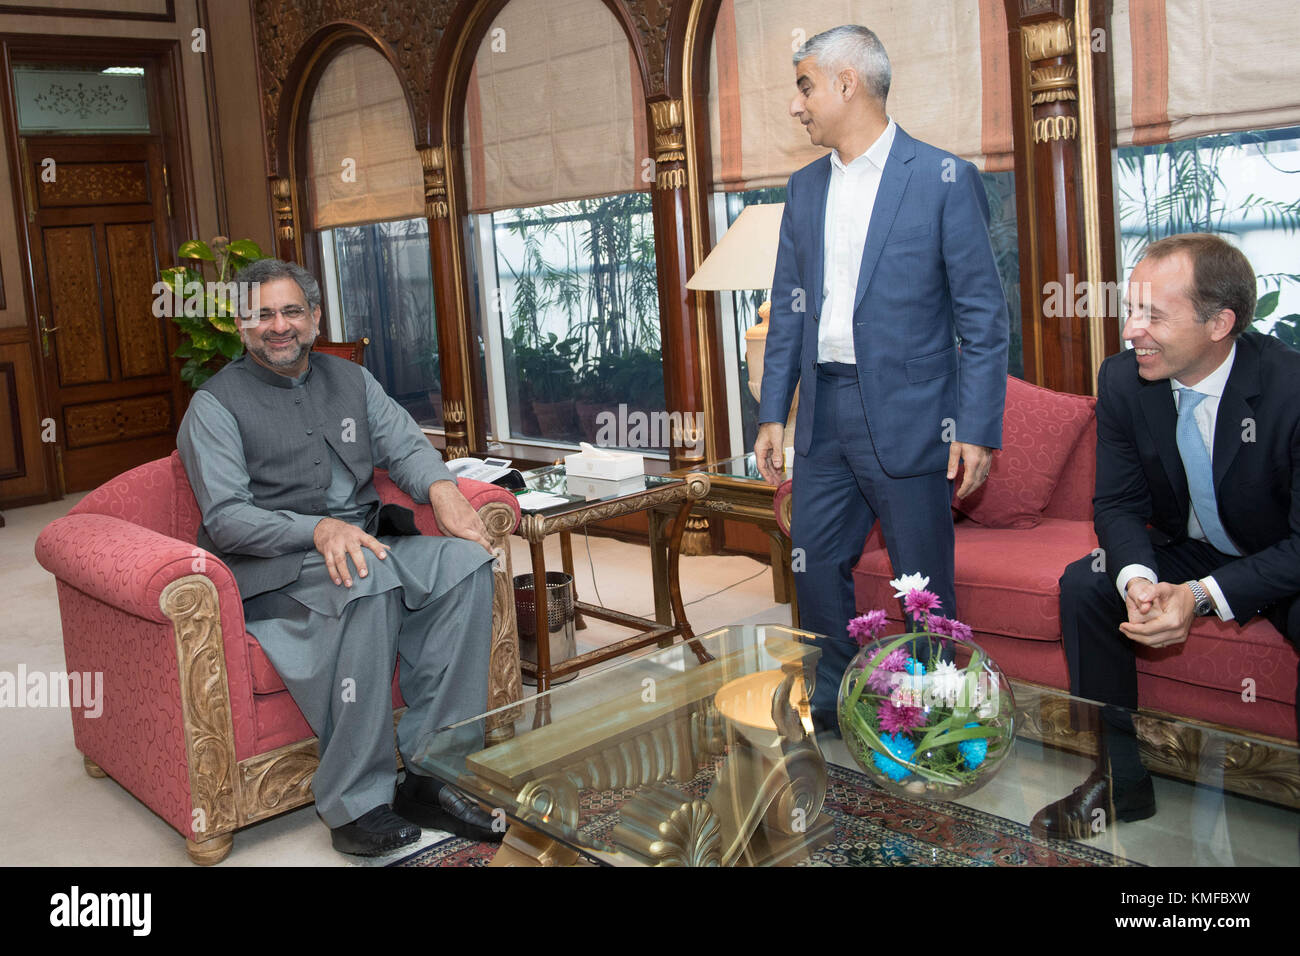 https://c8.alamy.com/comp/KMFBXW/mayor-for-london-sadiq-khan-meets-pakistani-prime-minister-shahid-KMFBXW.jpg